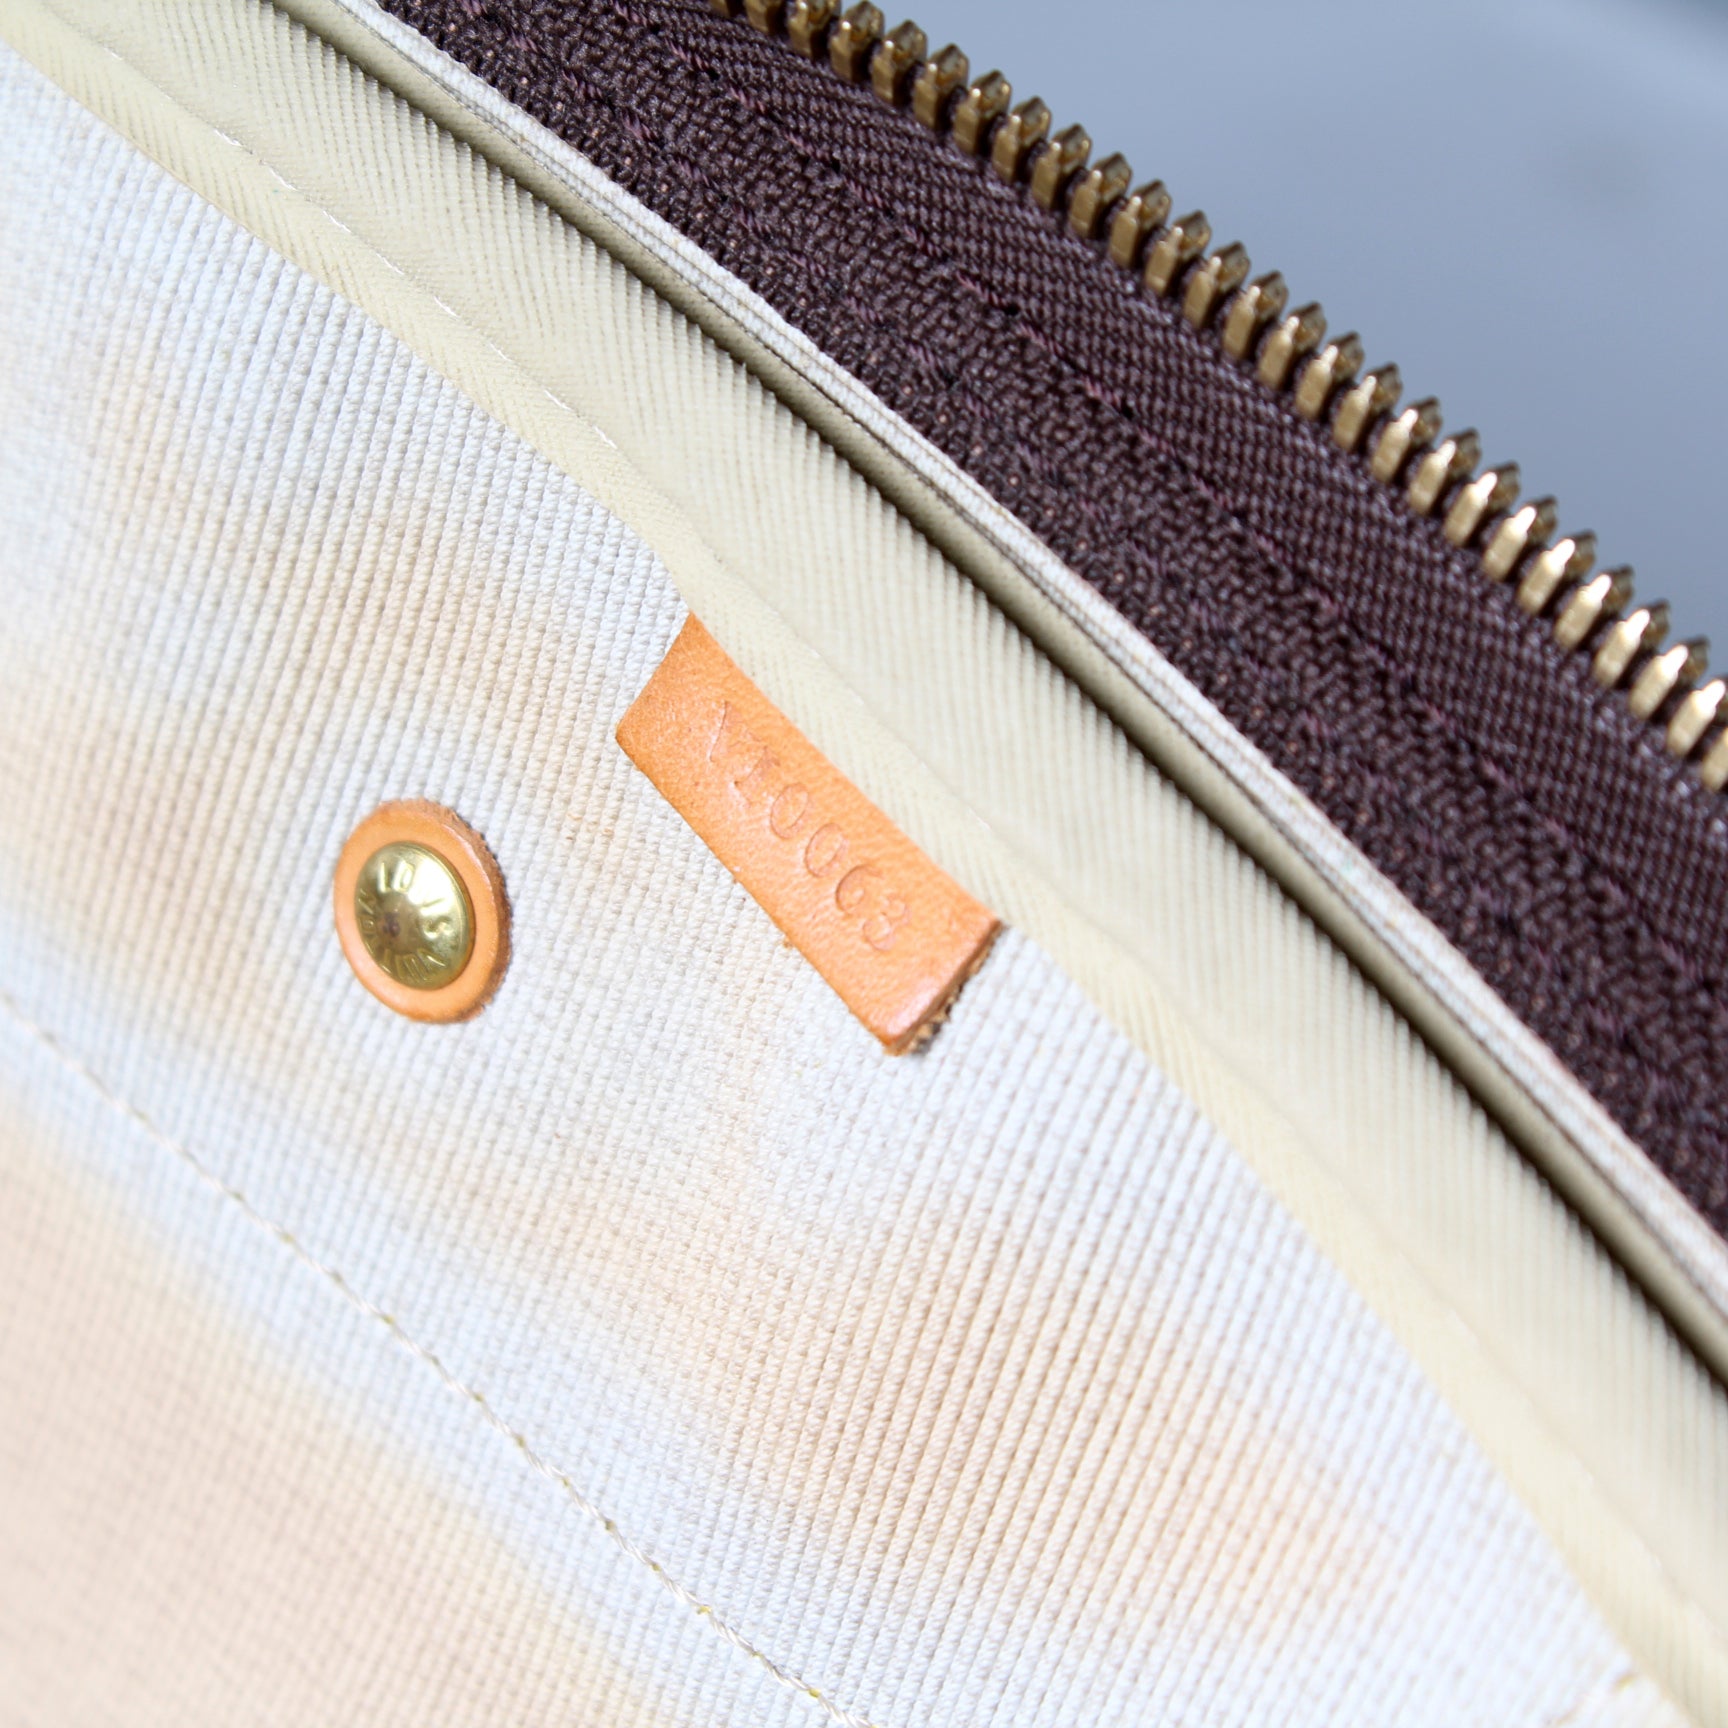 Alize 1 Compartment Monogram – Keeks Designer Handbags